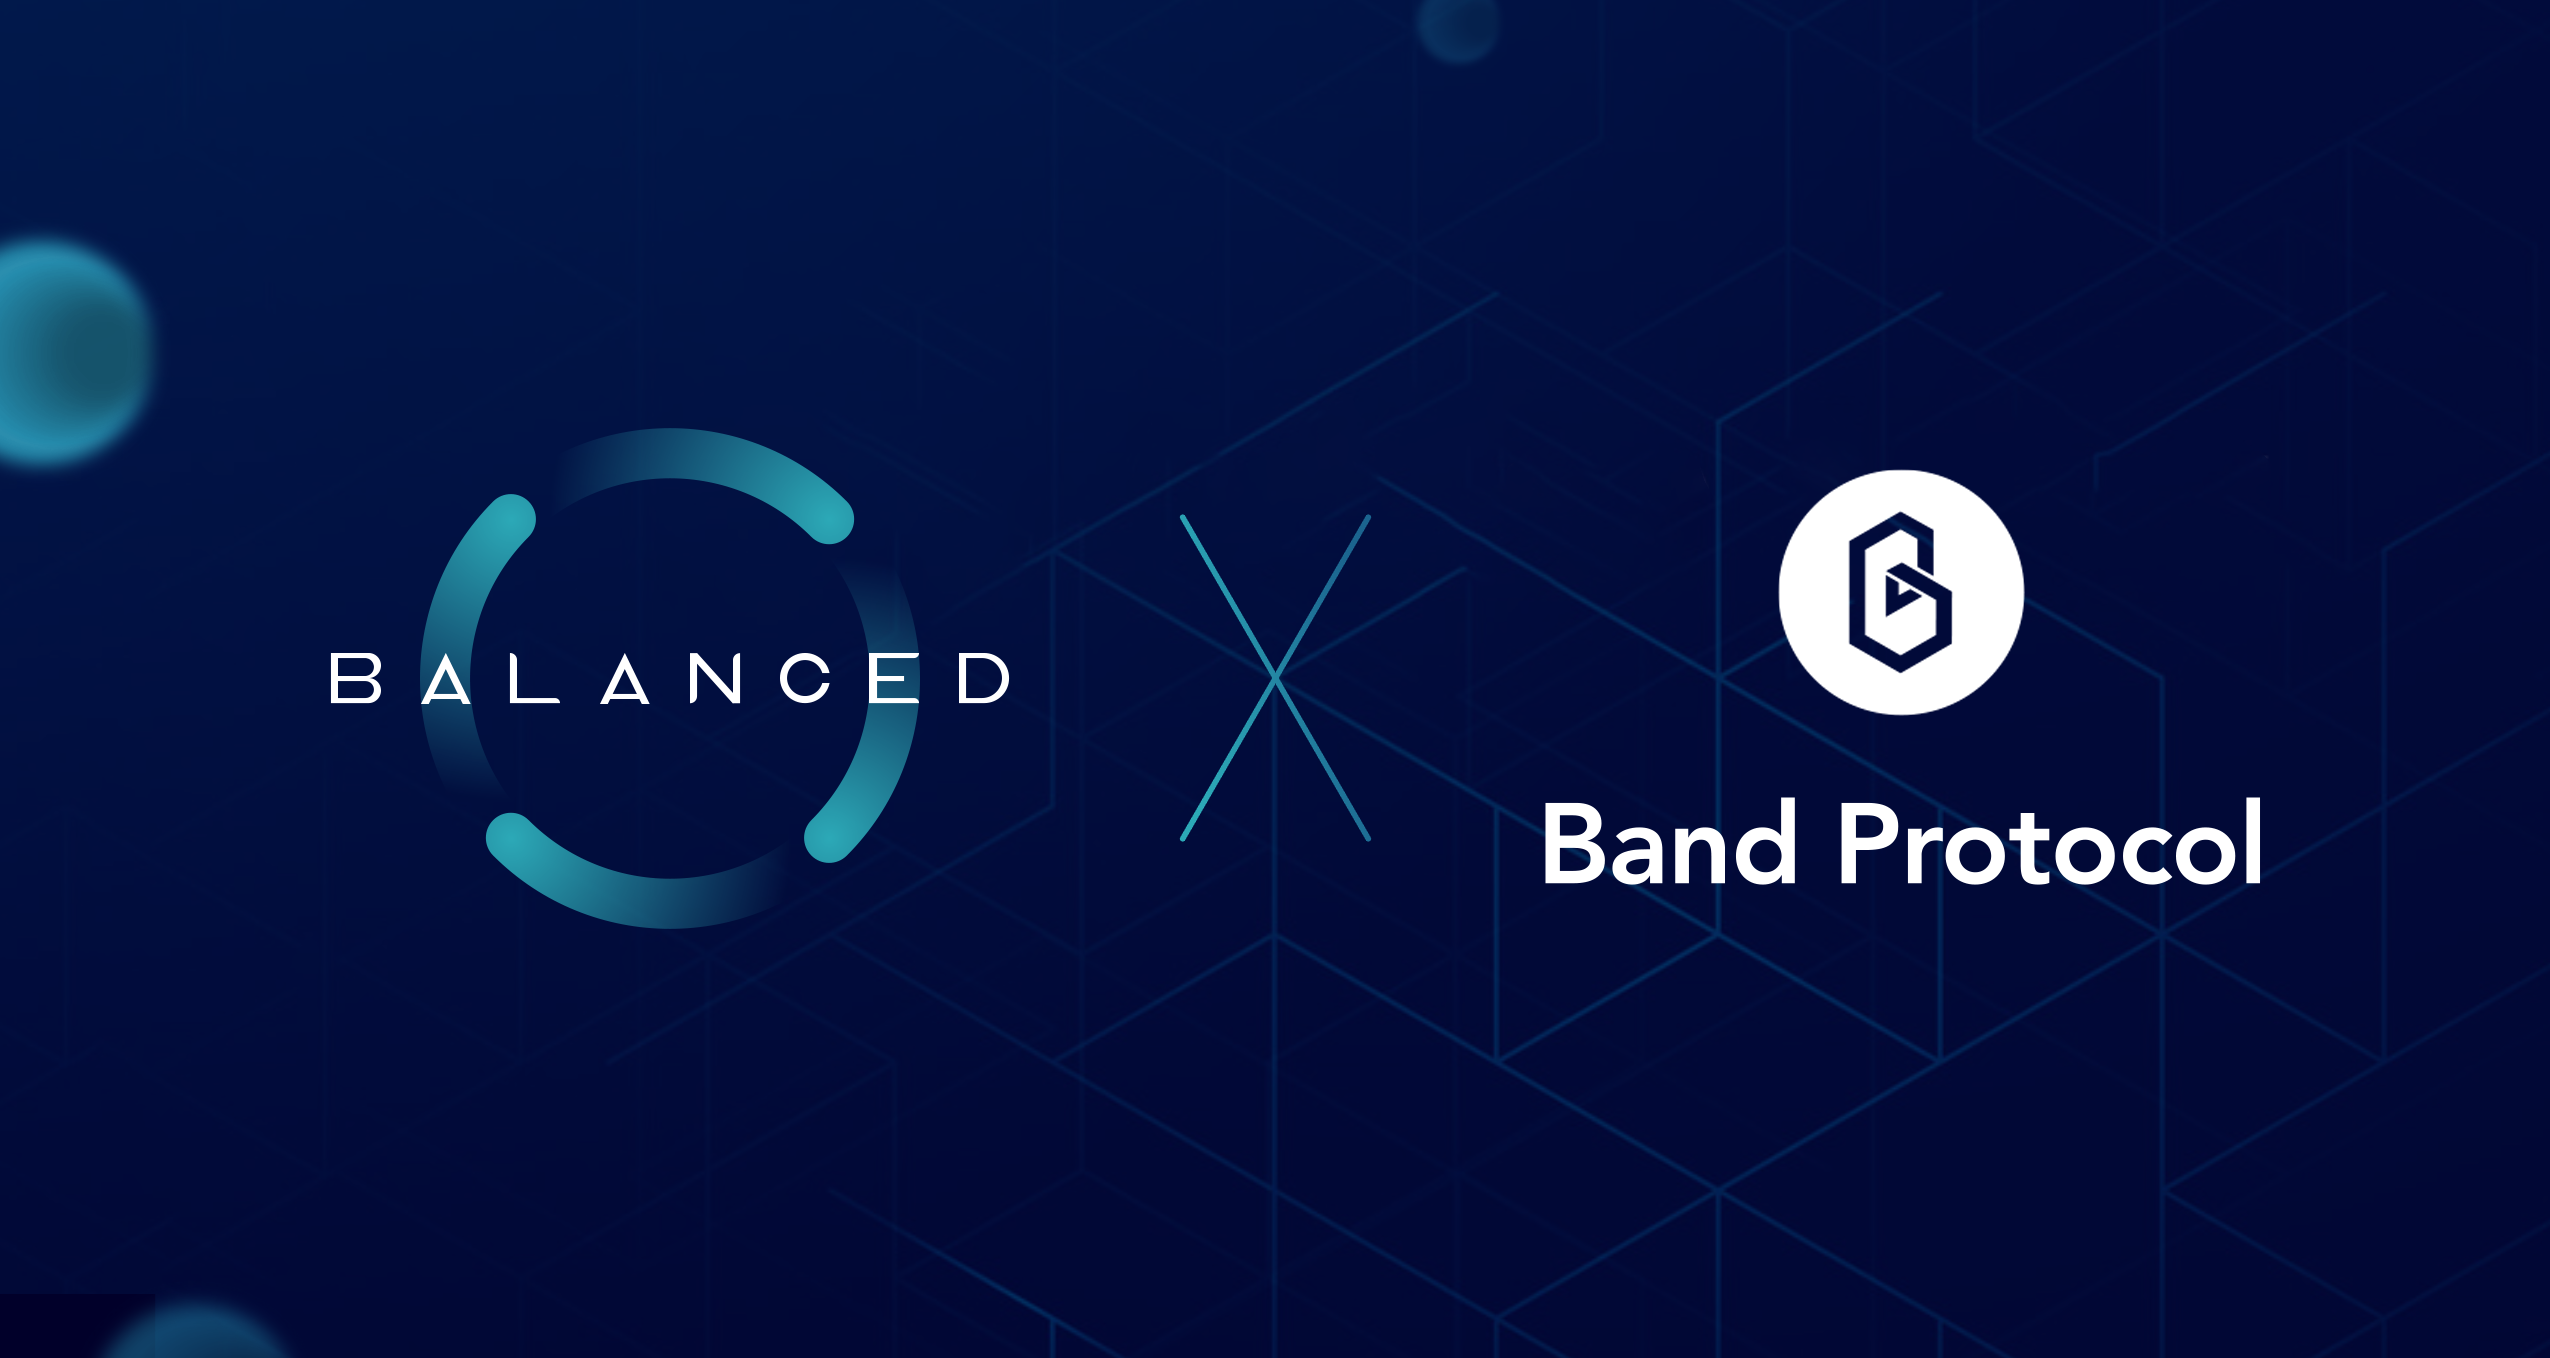 Balanced + Band | Strategic partnership and launch highlights